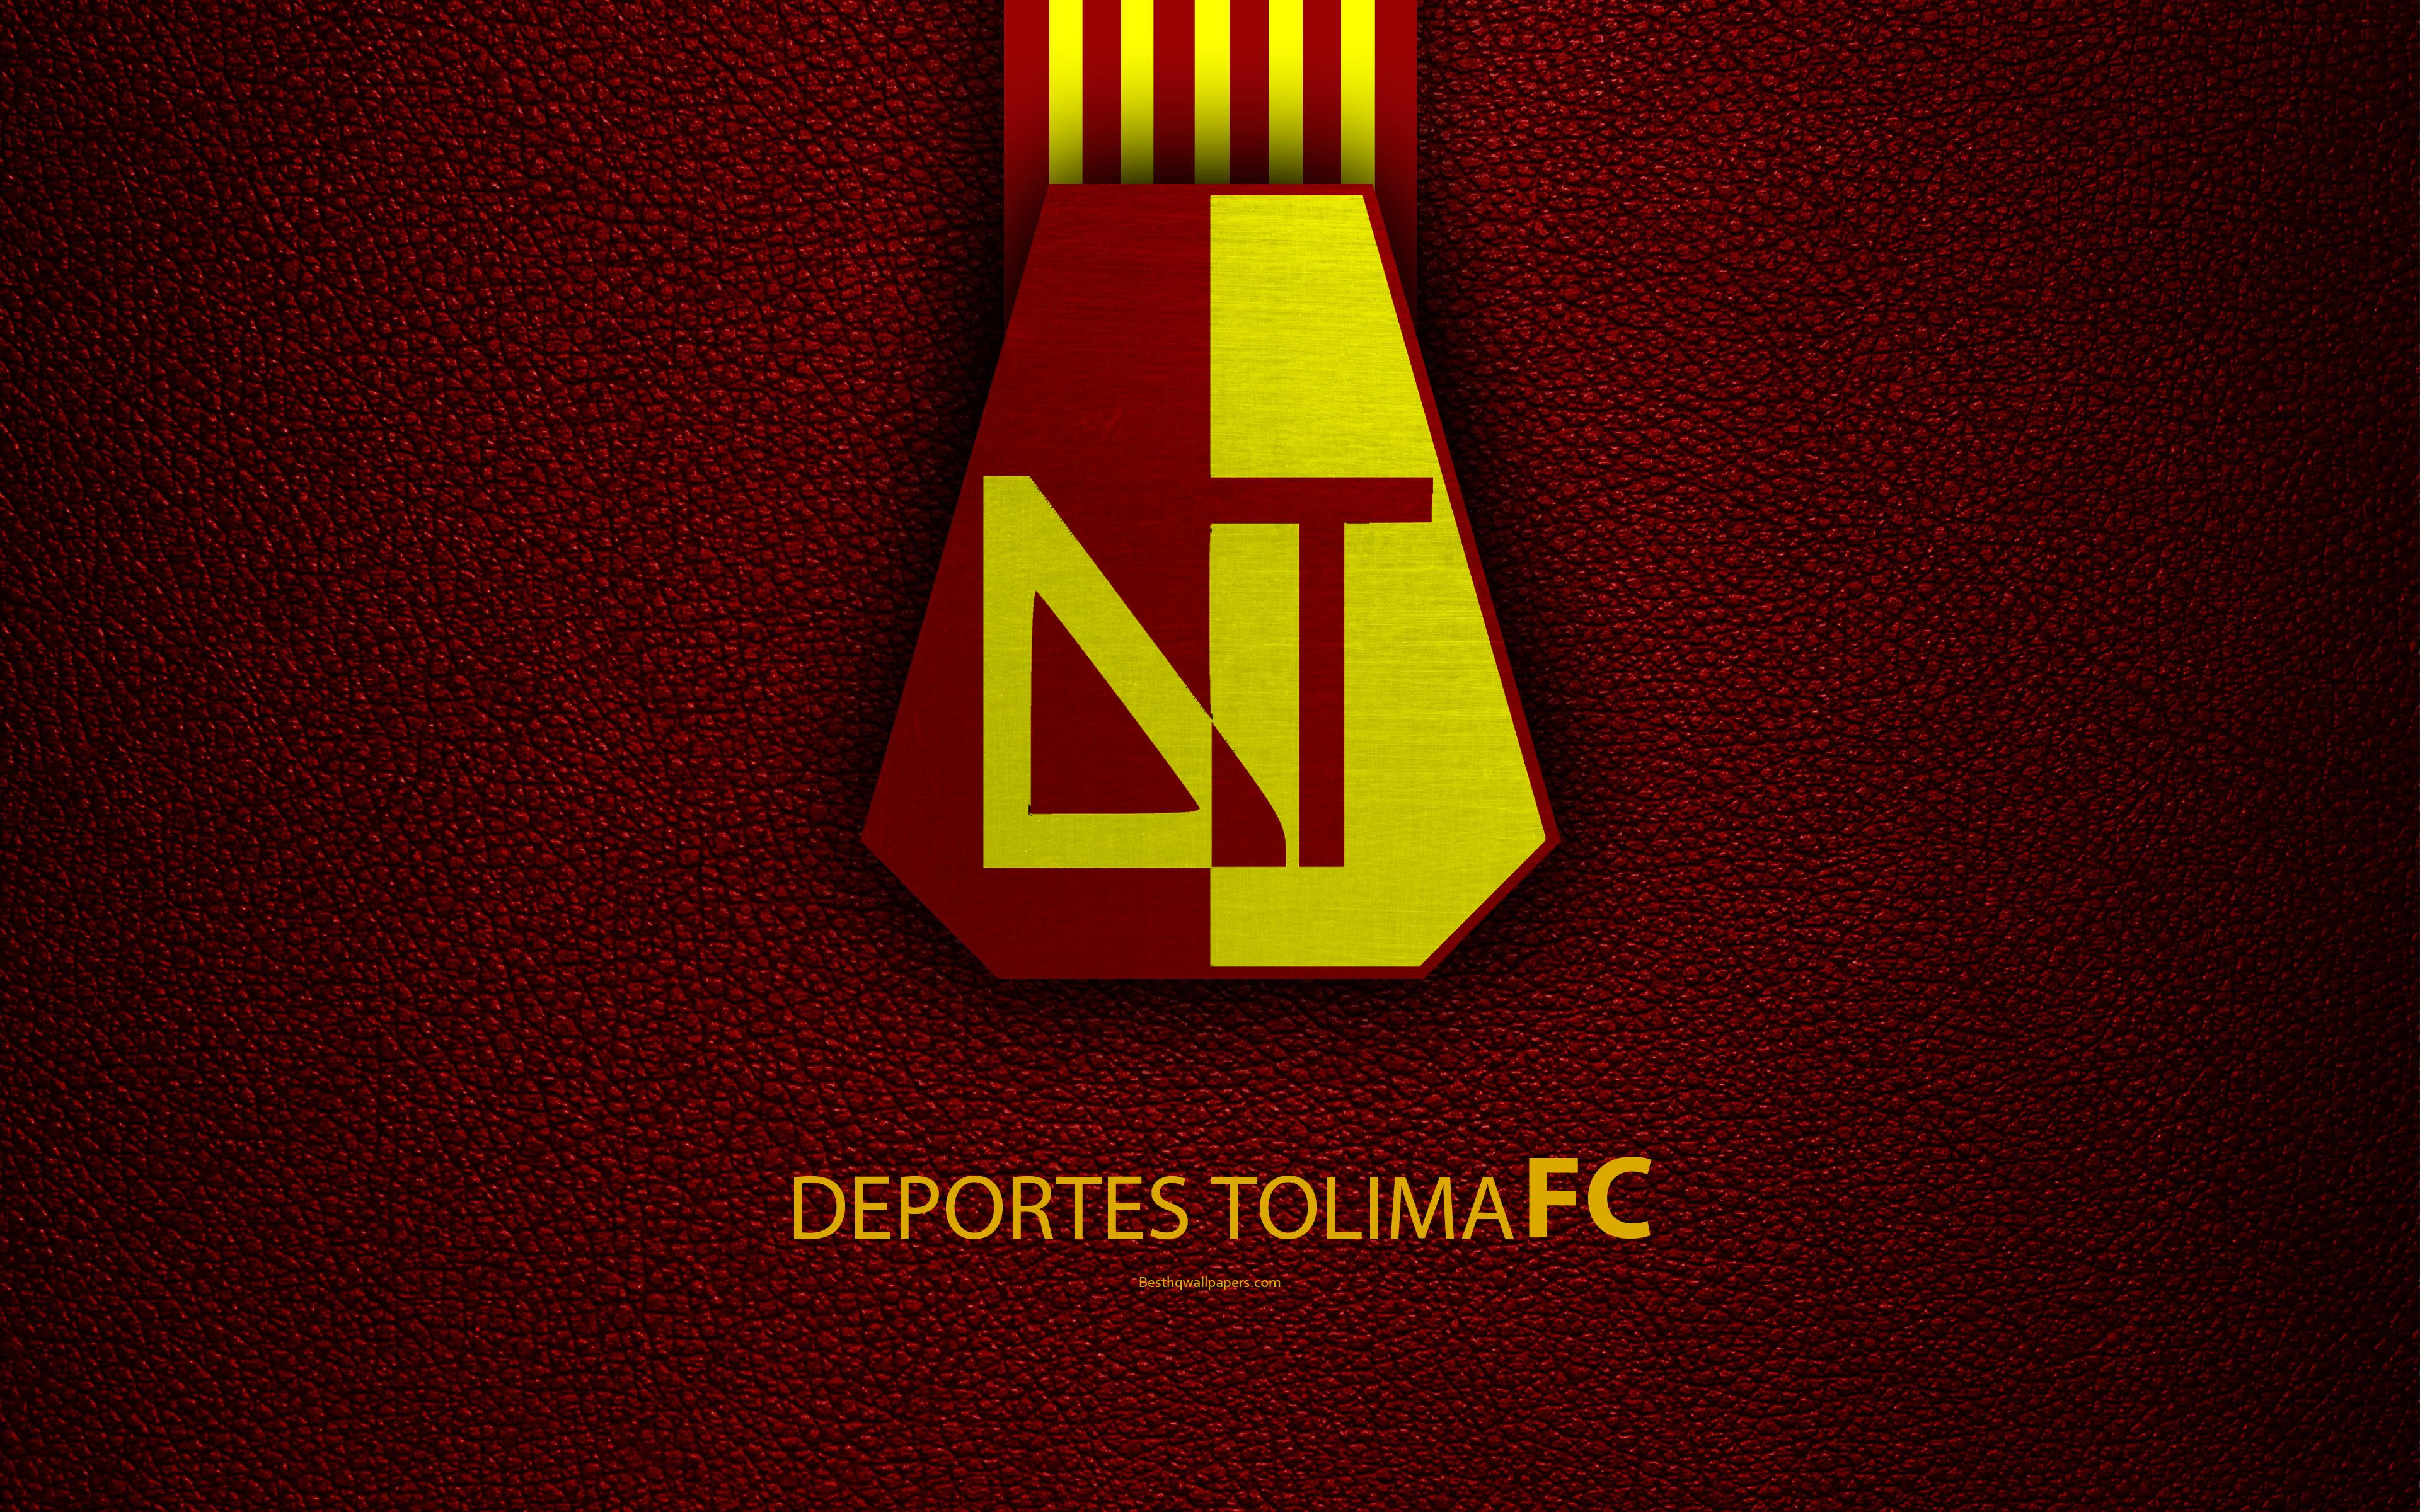 Download wallpaper Club Deportes Tolima, 4k, leather texture, logo